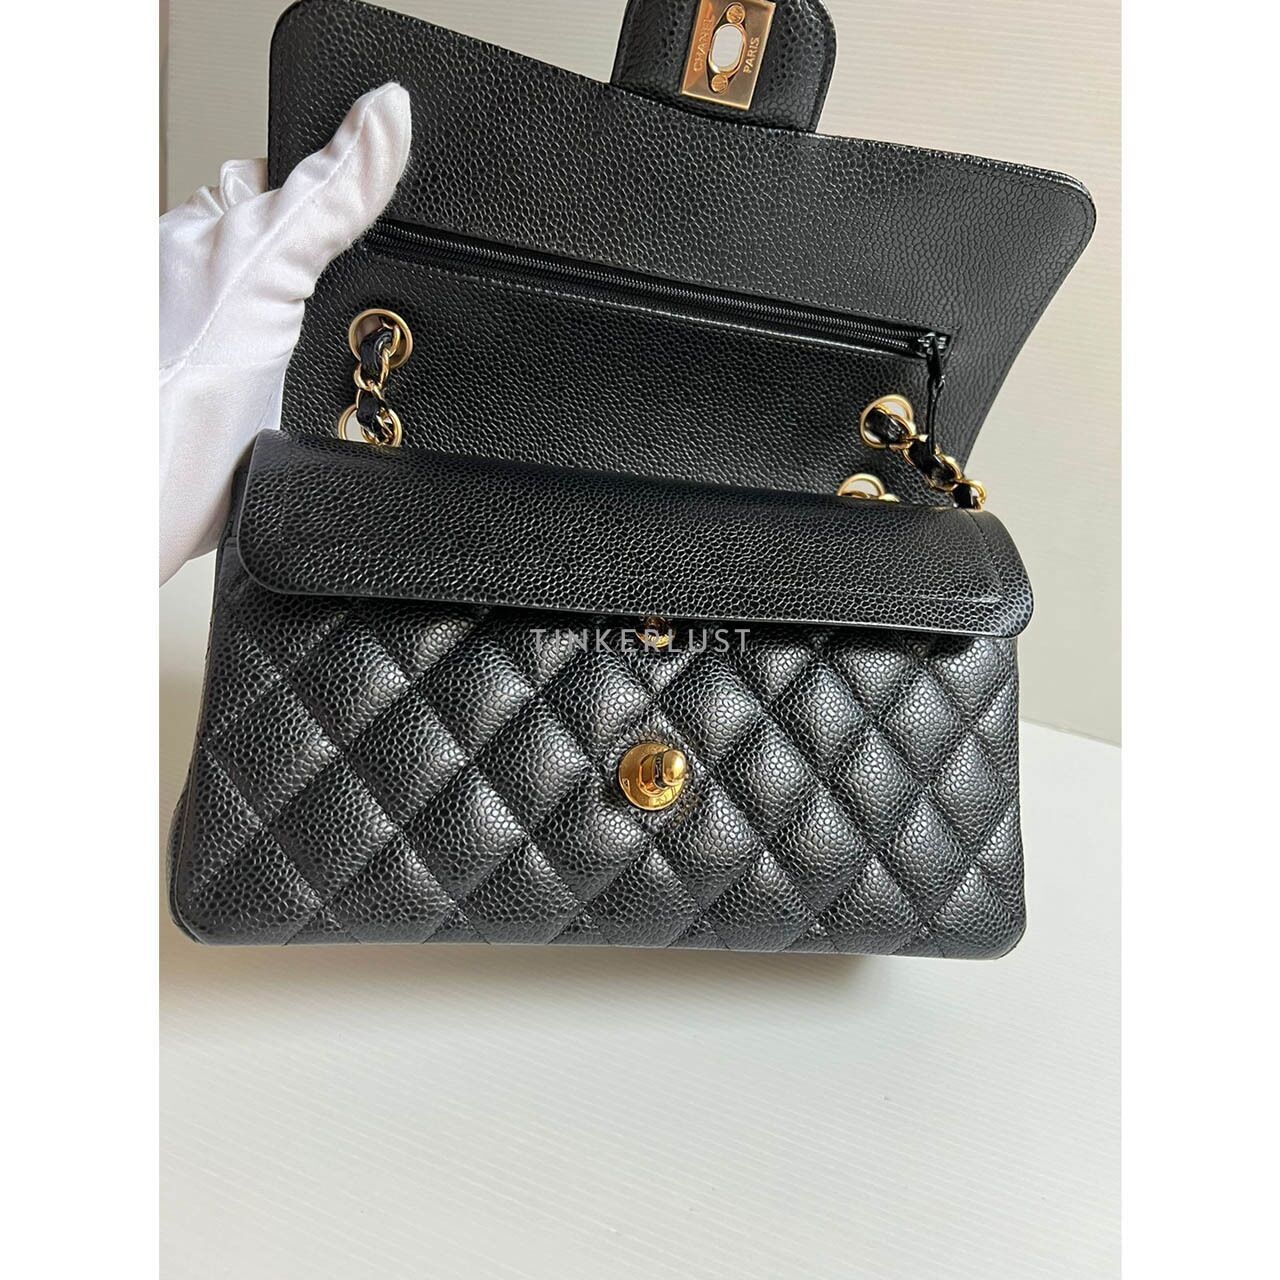 Chanel Classic Small Black Caviar GHW #28 Shoulder Bag